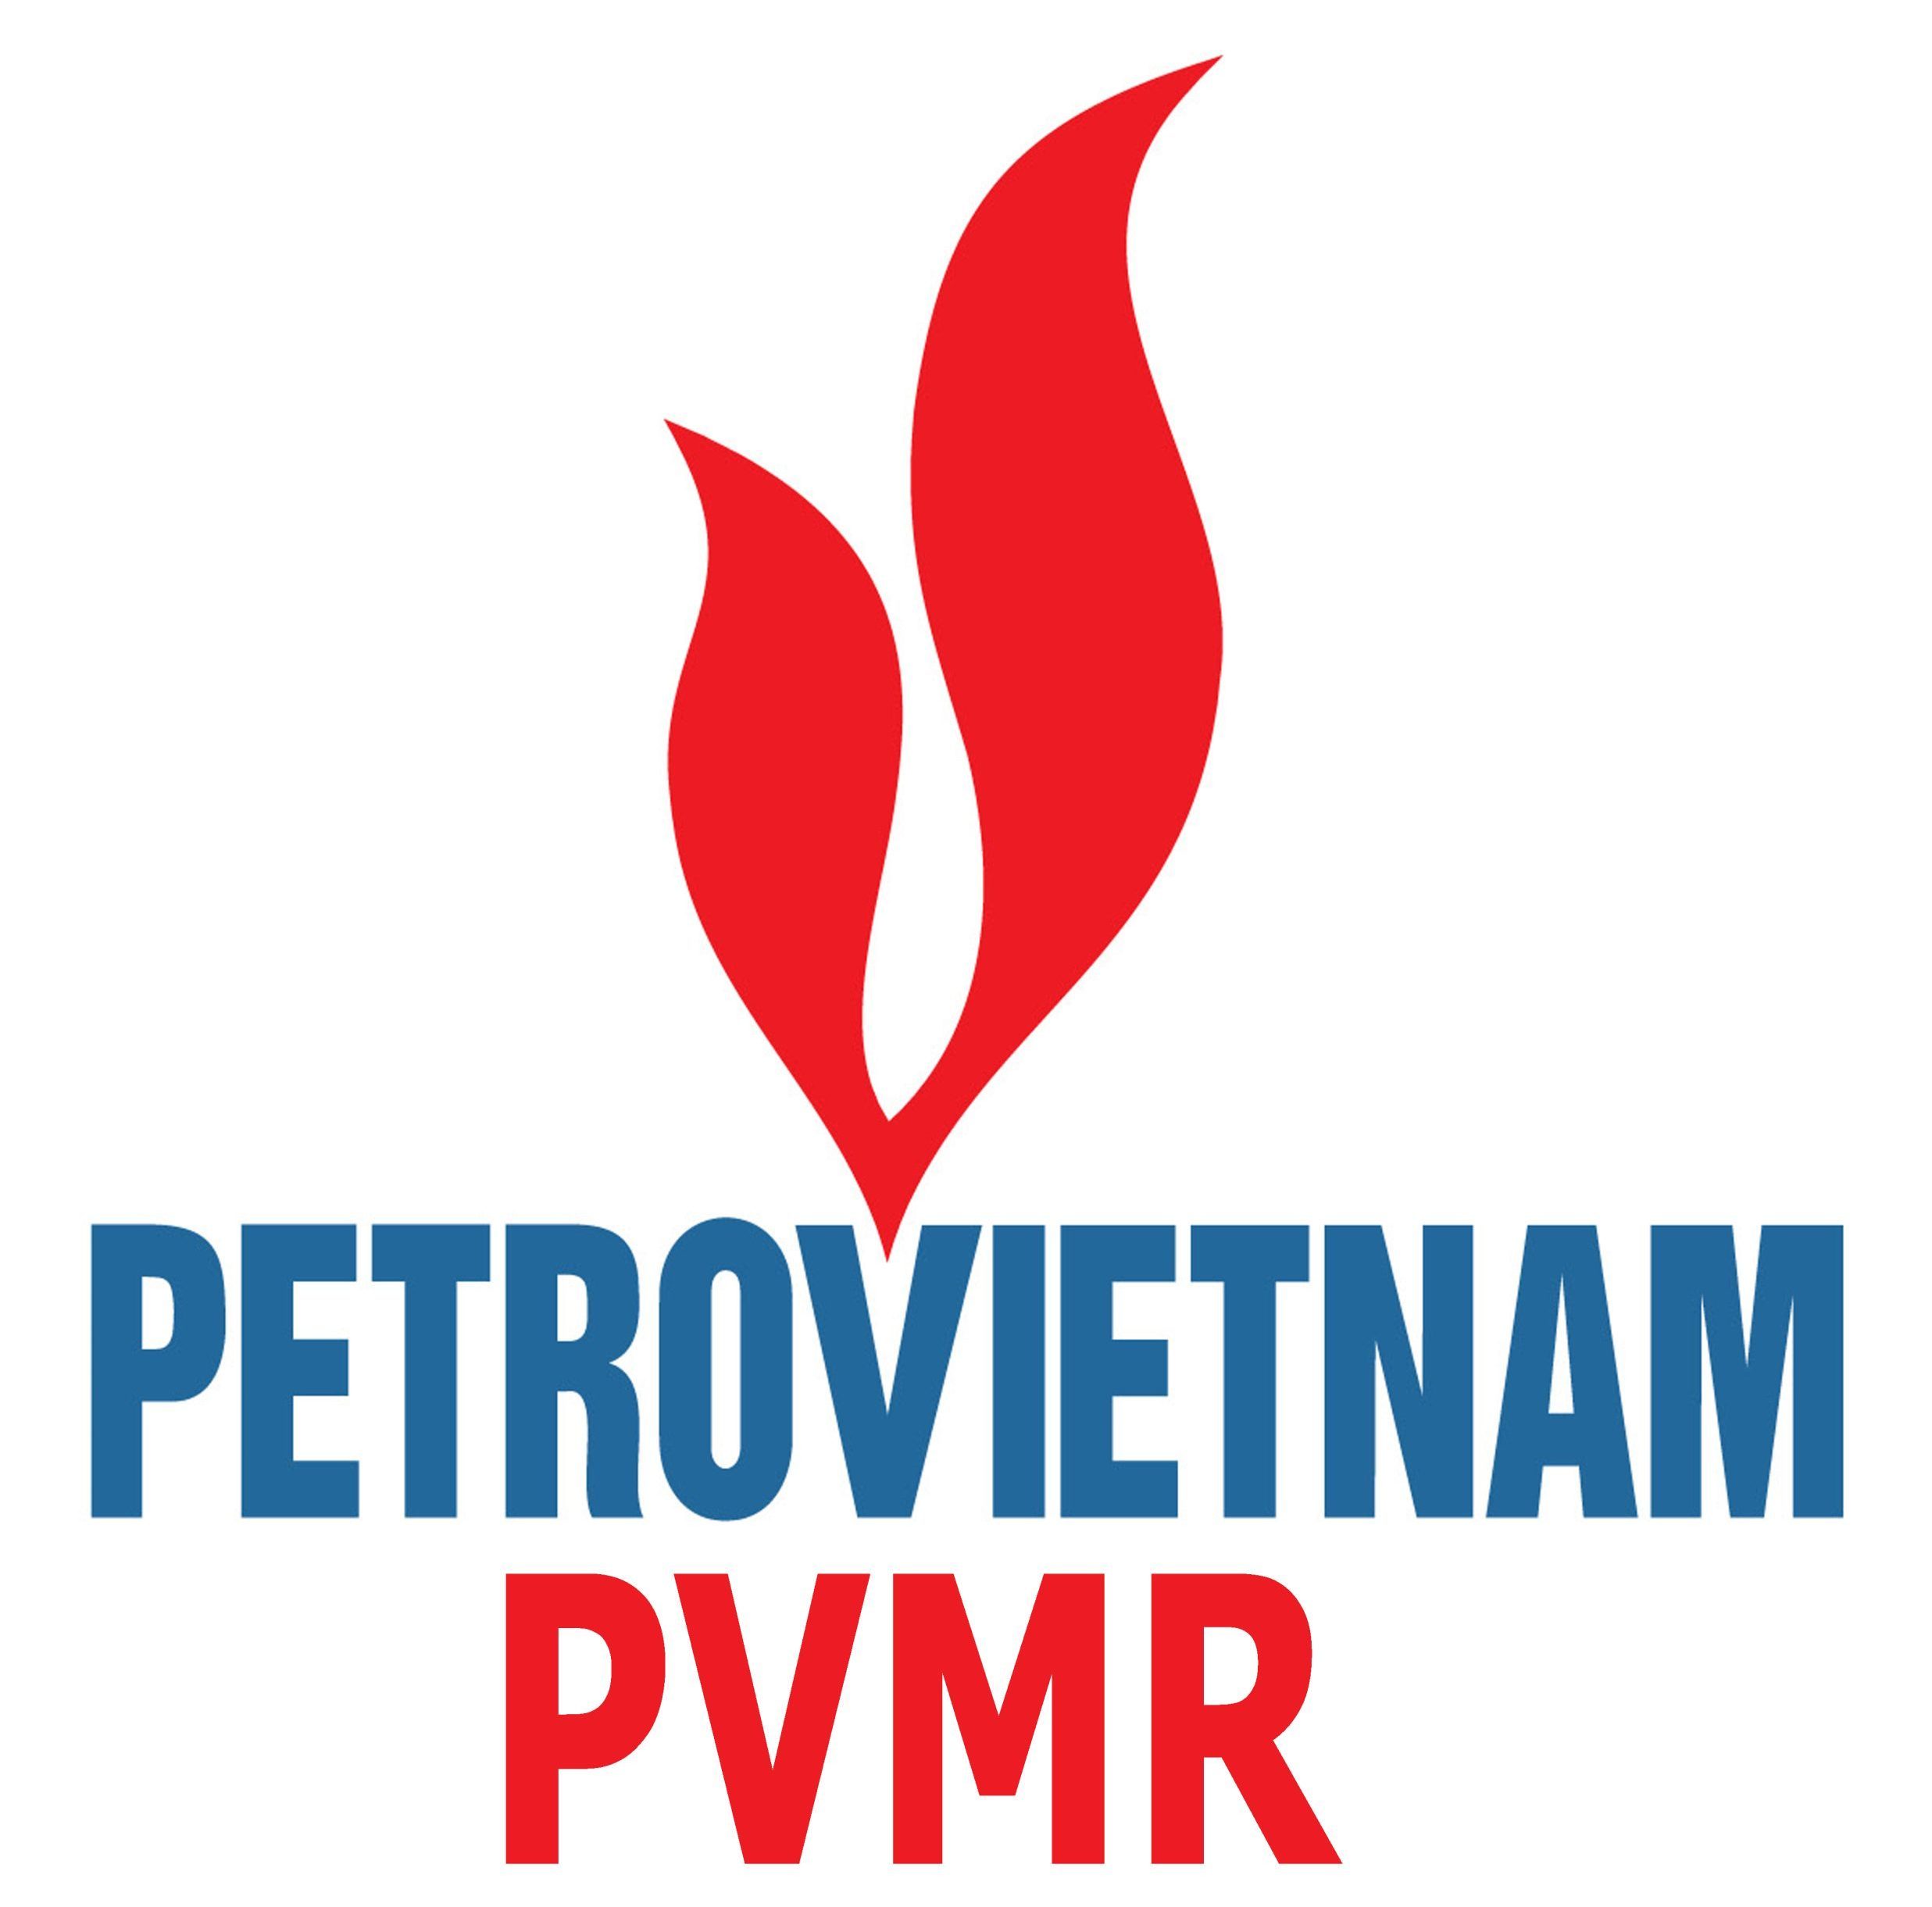 PVMR Vetting